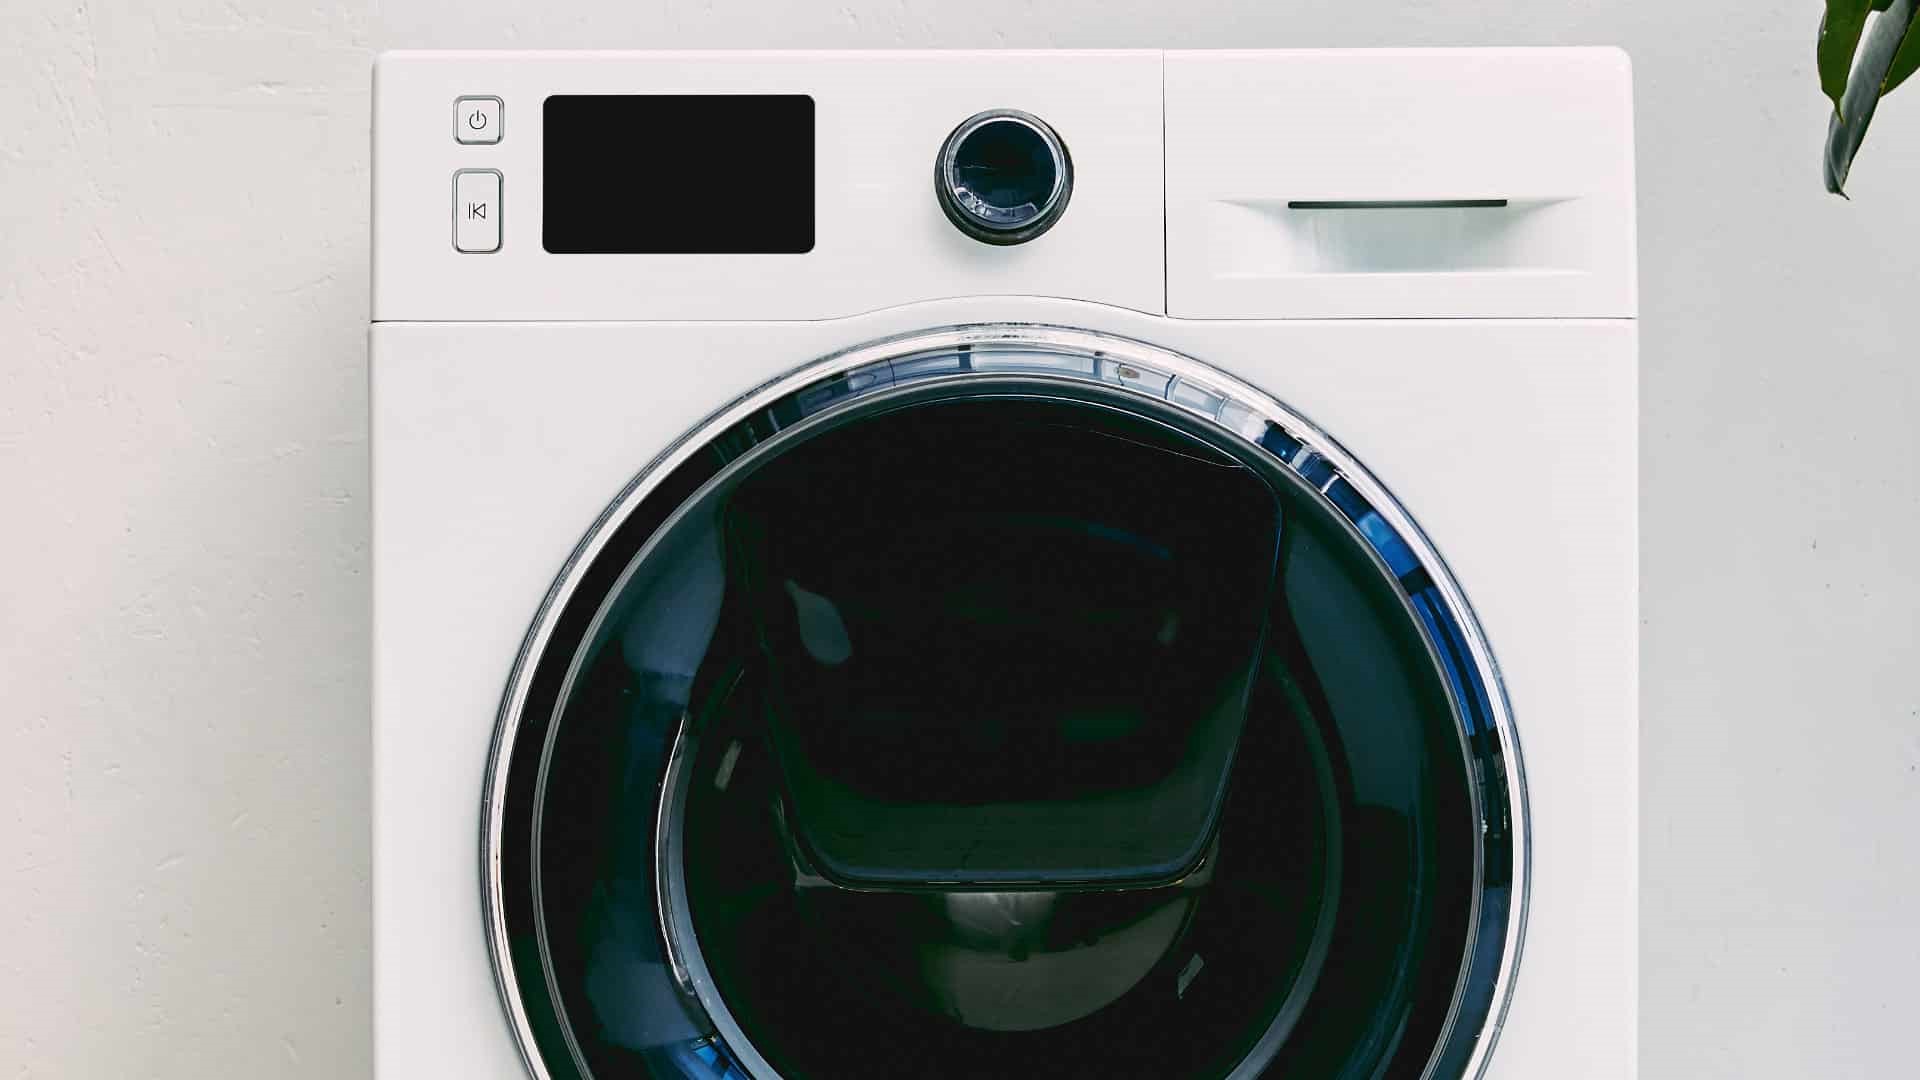 How To Unlock A Samsung Washing Machine